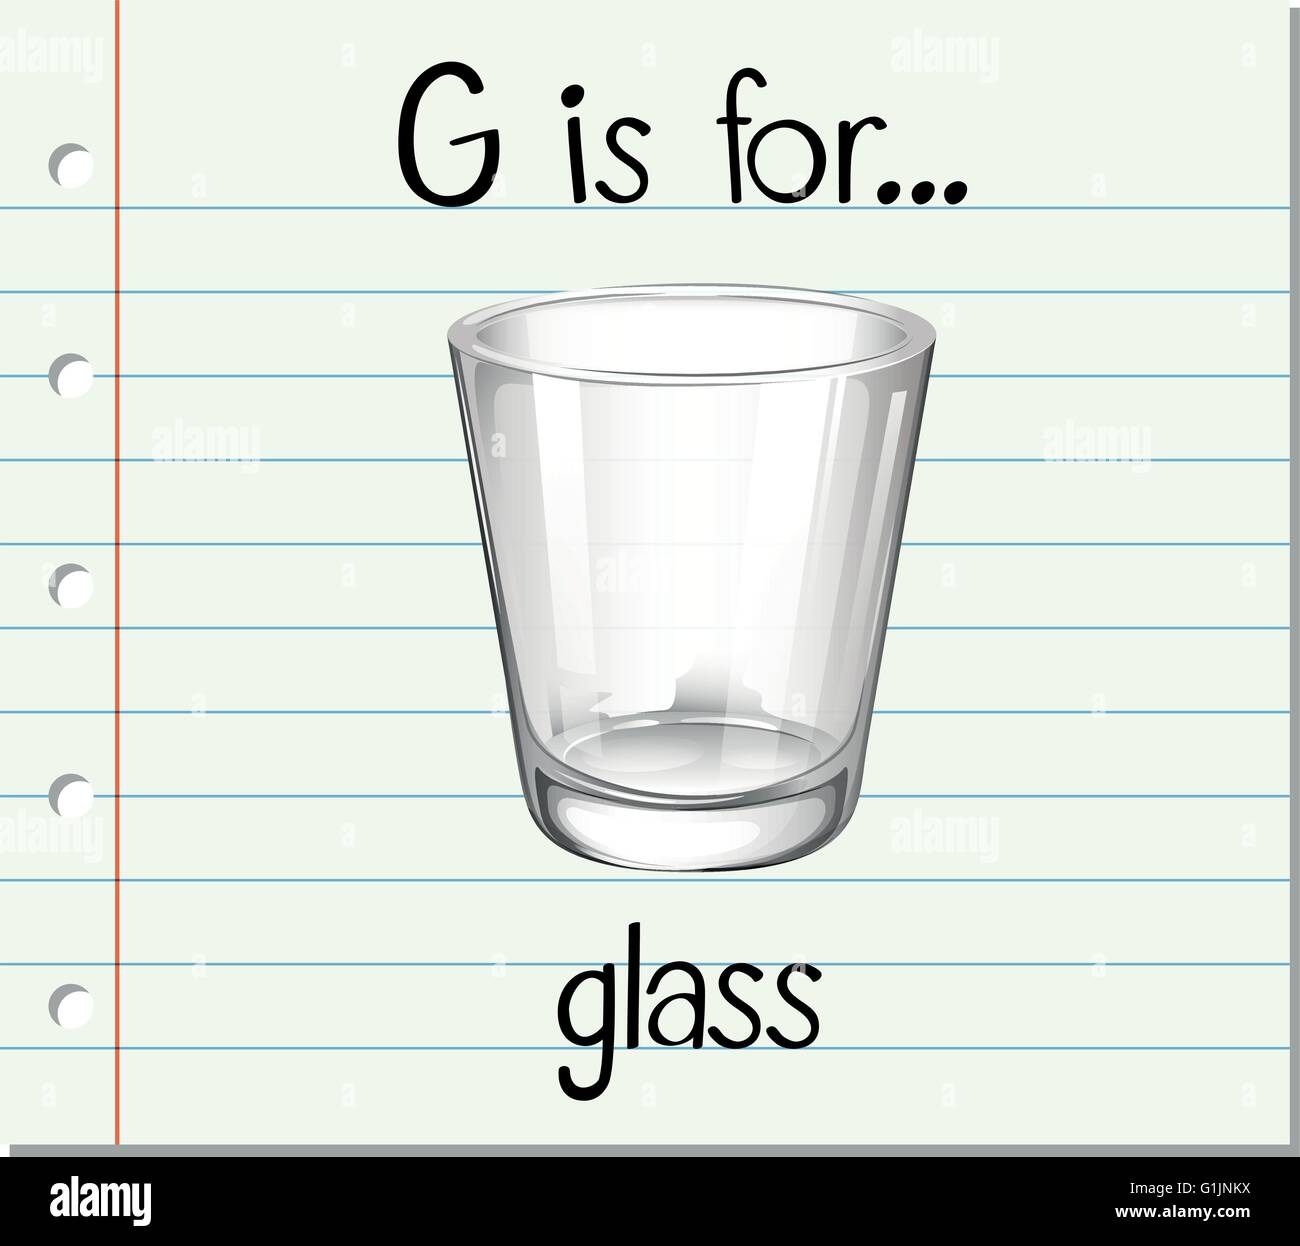 Flashcard letter G is for glass illustration Stock Vector